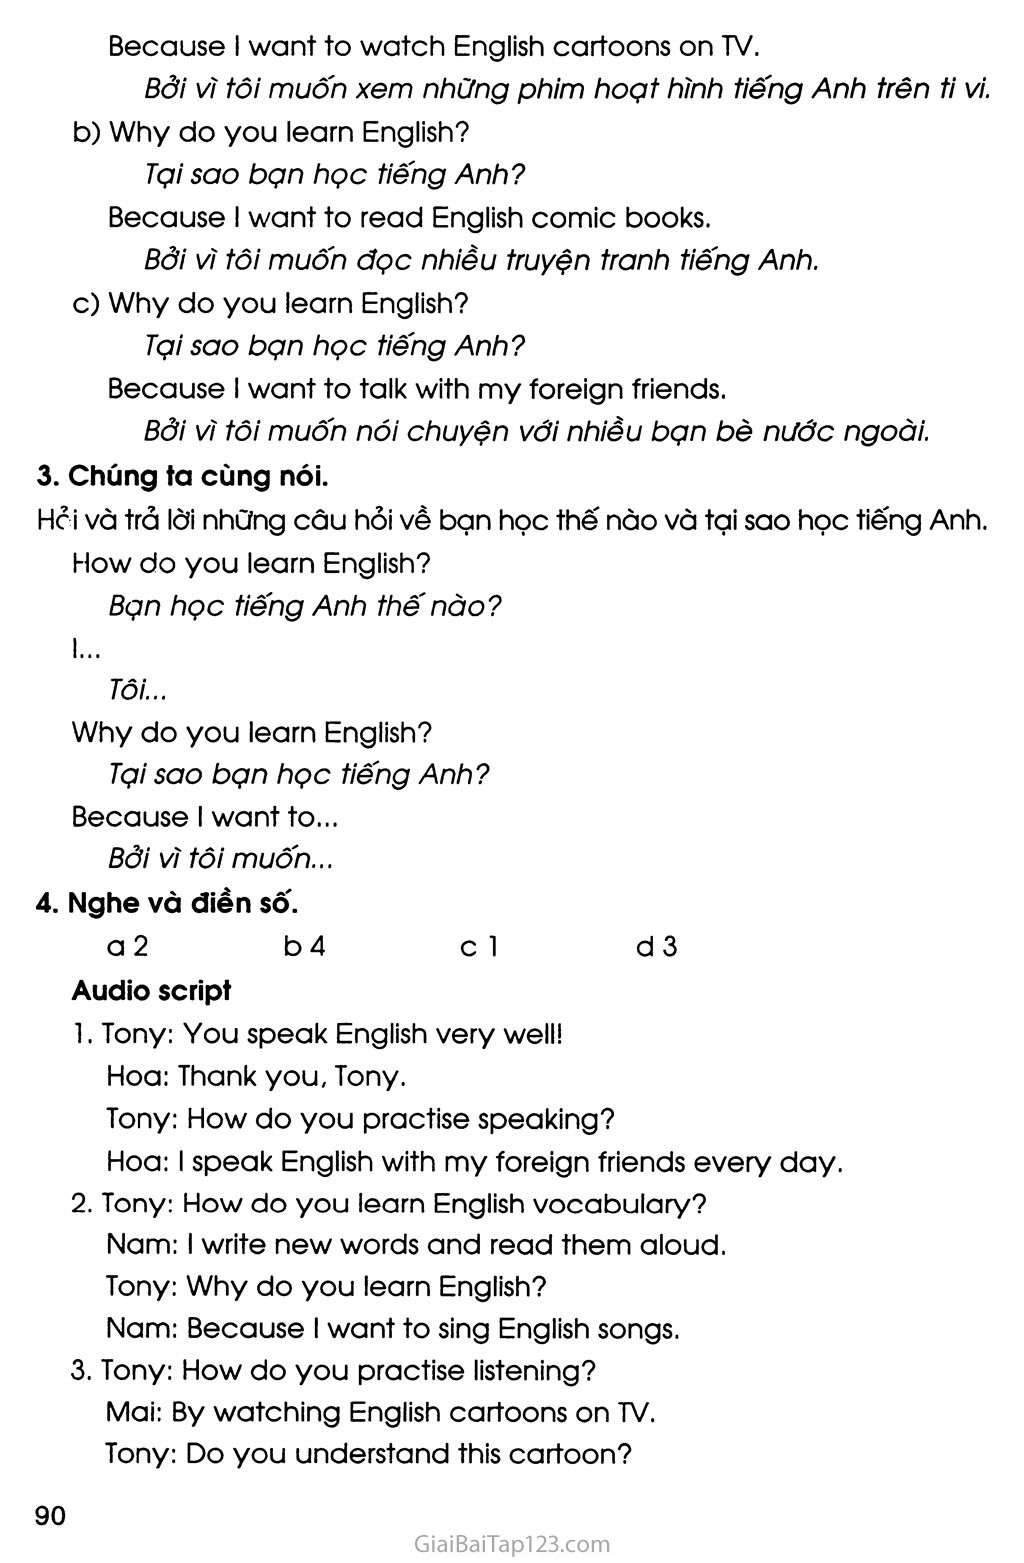 UNIT 7: HOW DO YOU LEARN ENGLISH? trang 10